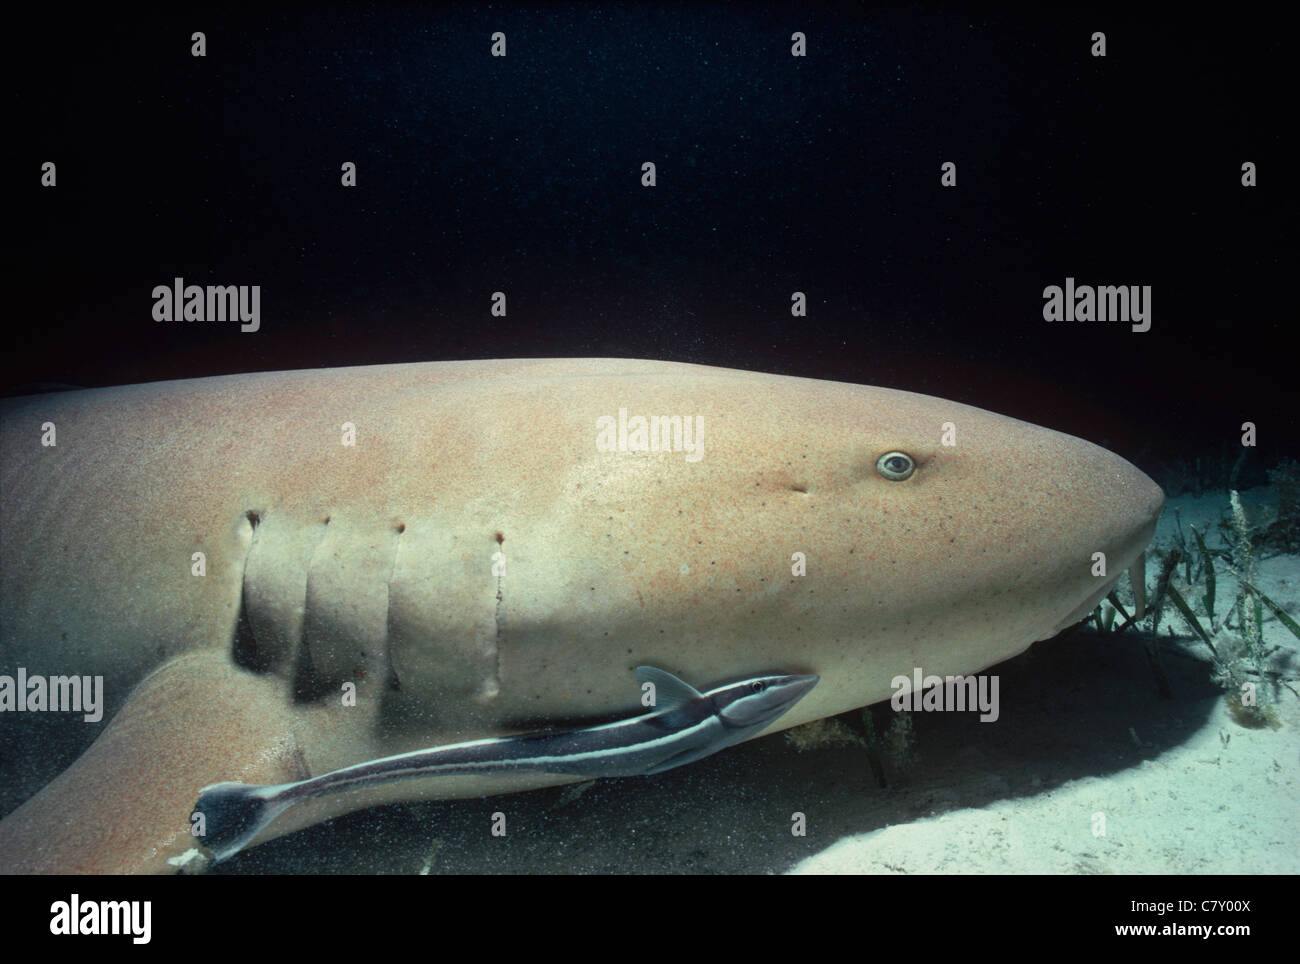 Nurse Shark (Ginglymostoma cirratum) with Remora demonstrates a symbiotic relationship, Bimini, Bahamas - Caribbean Sea Stock Photo